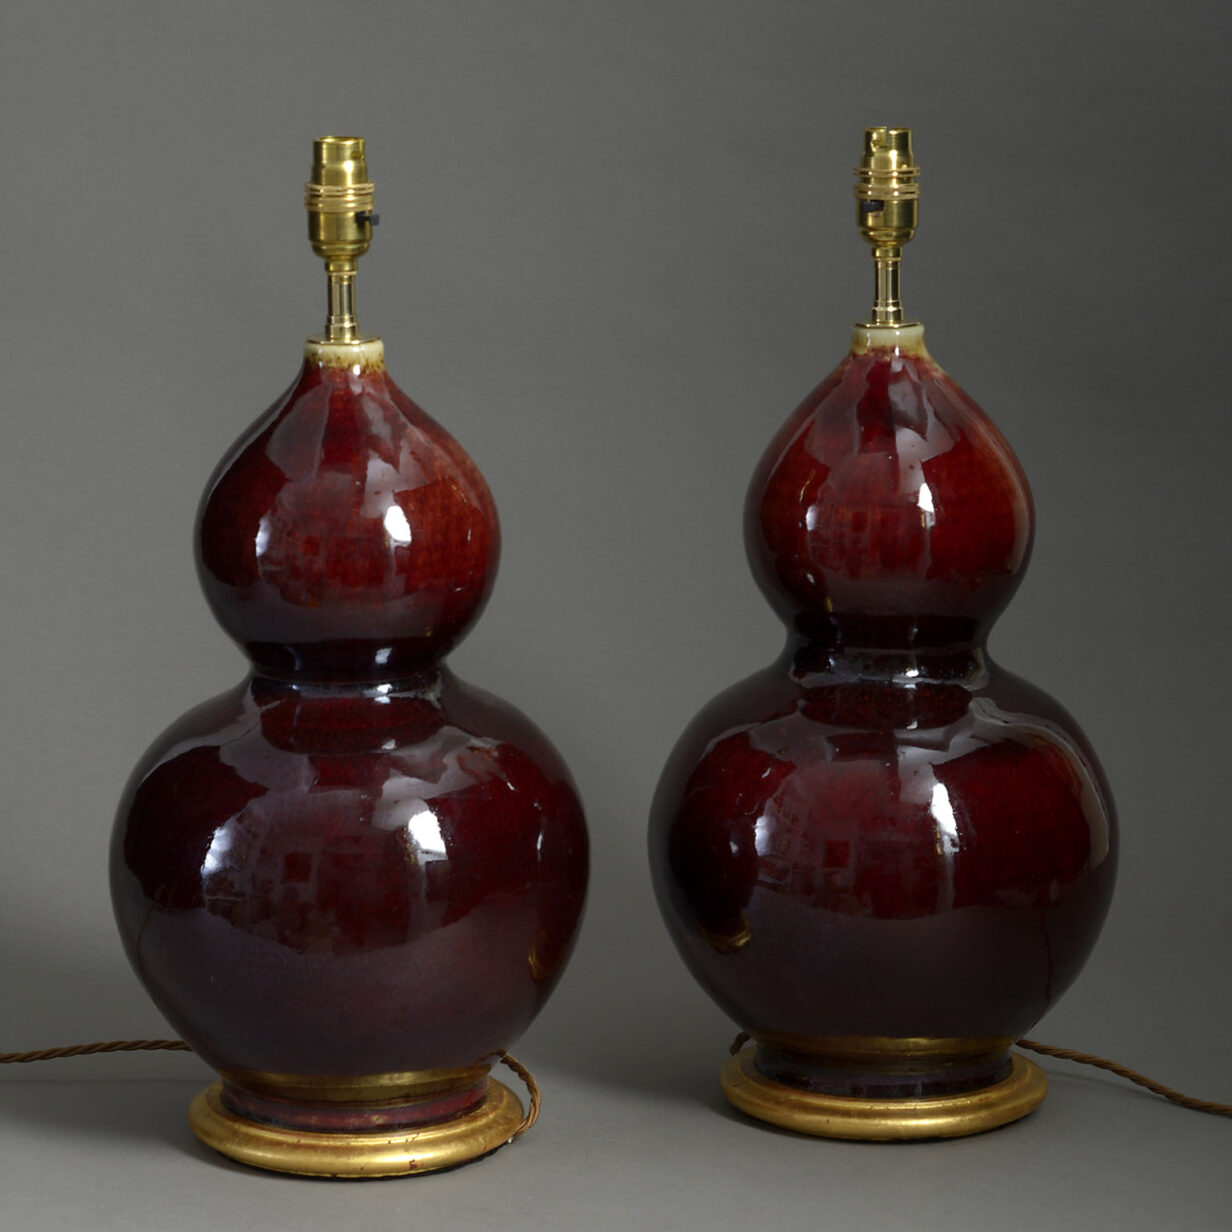 Pair of sang de boeuf gourd vase lamps